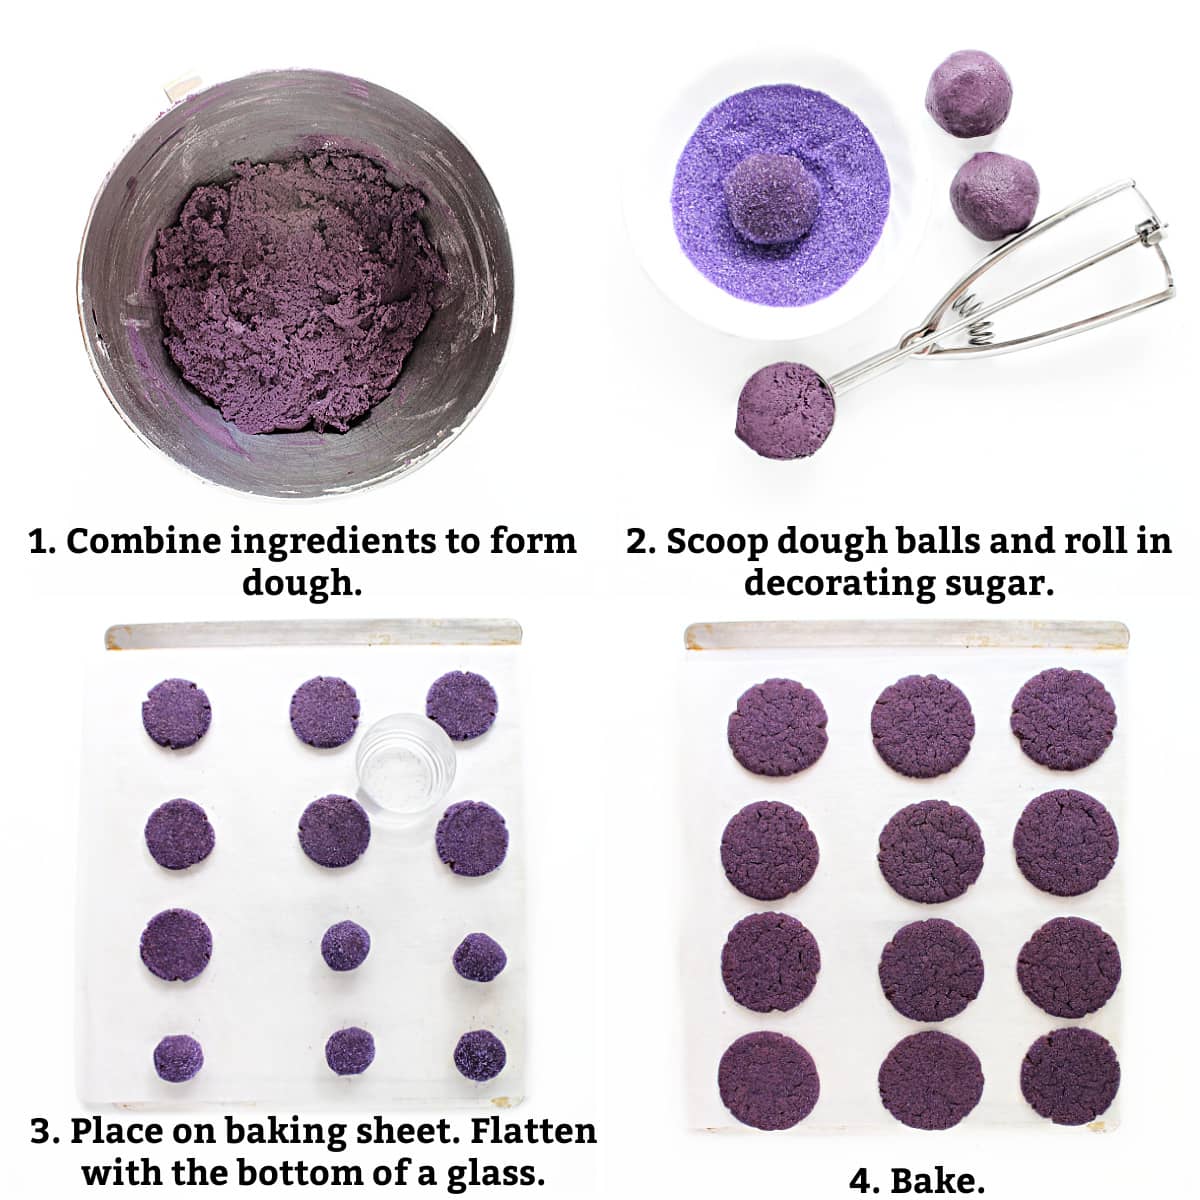 Instructions: combine ingredients, scoop dough balls, roll in sugar, flatten on baking sheet, bake.